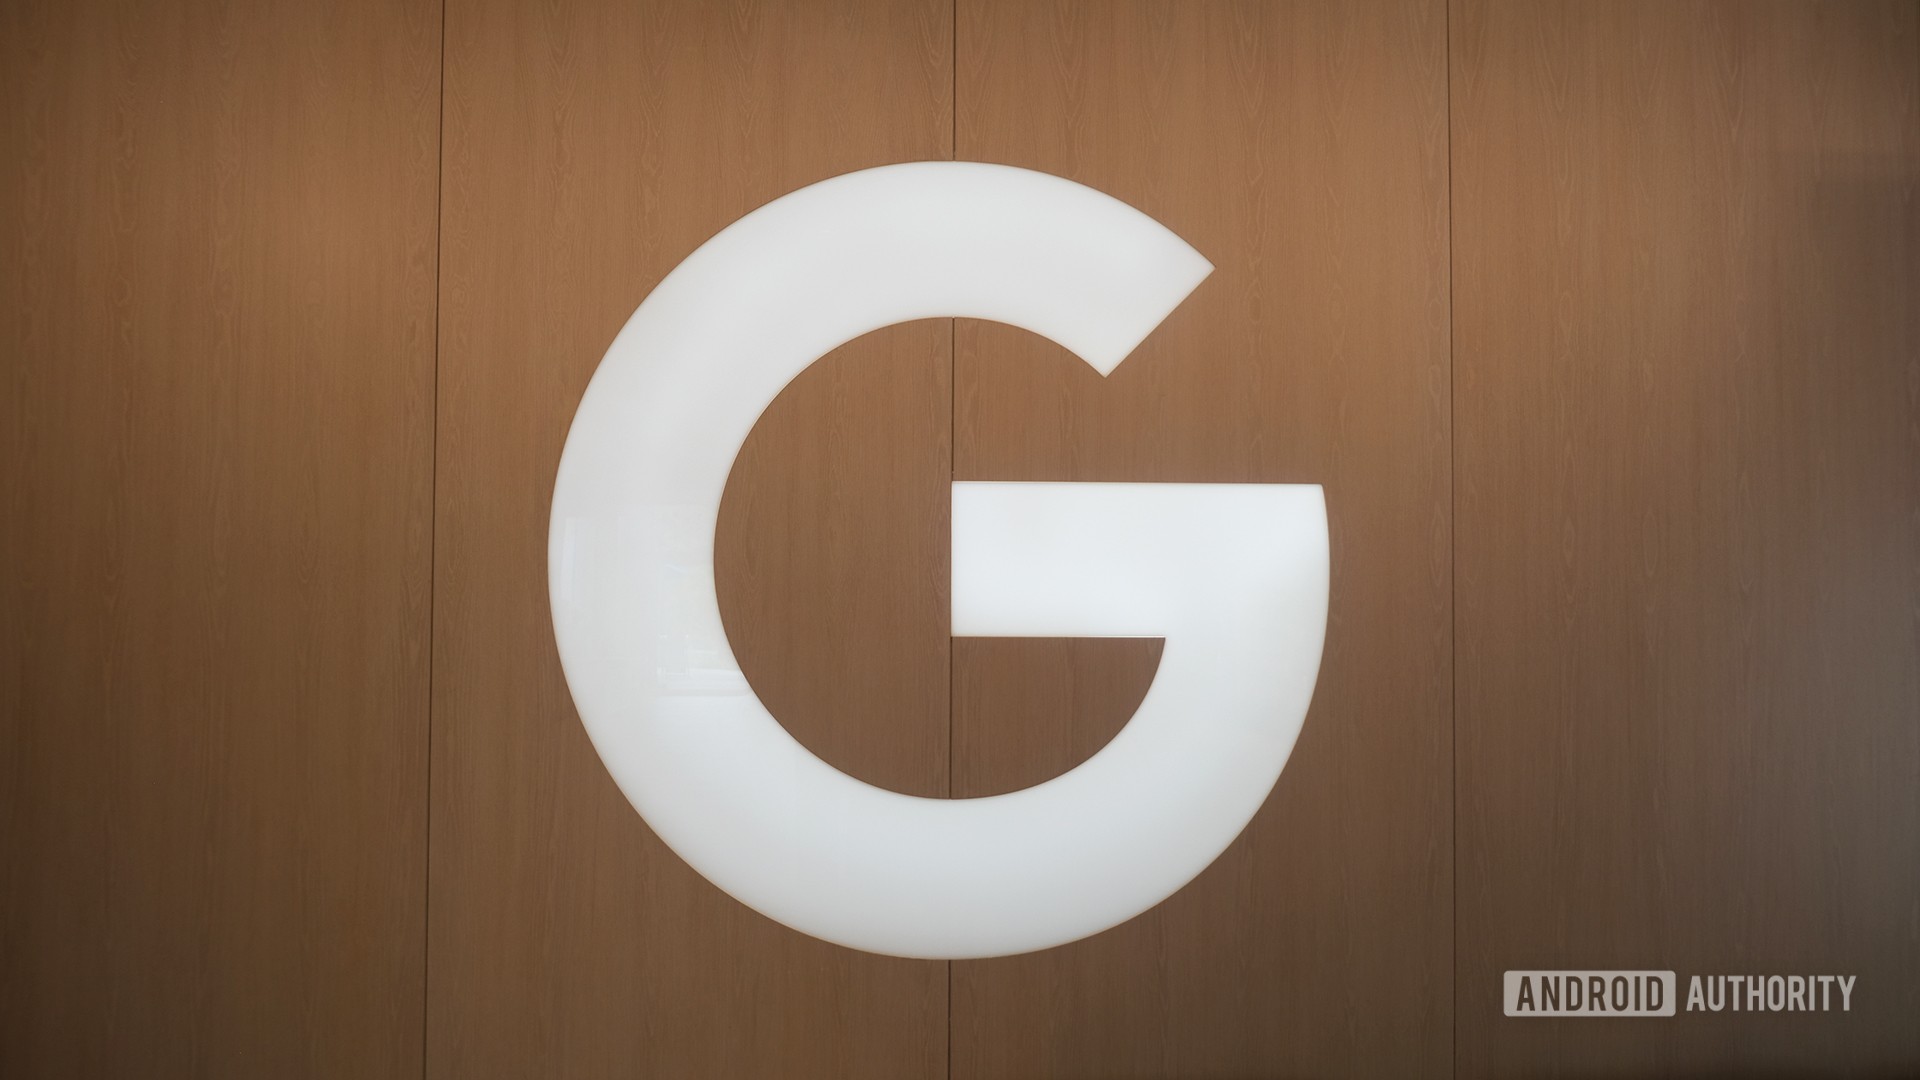 Google Logo as seen at Google Store Mountain View